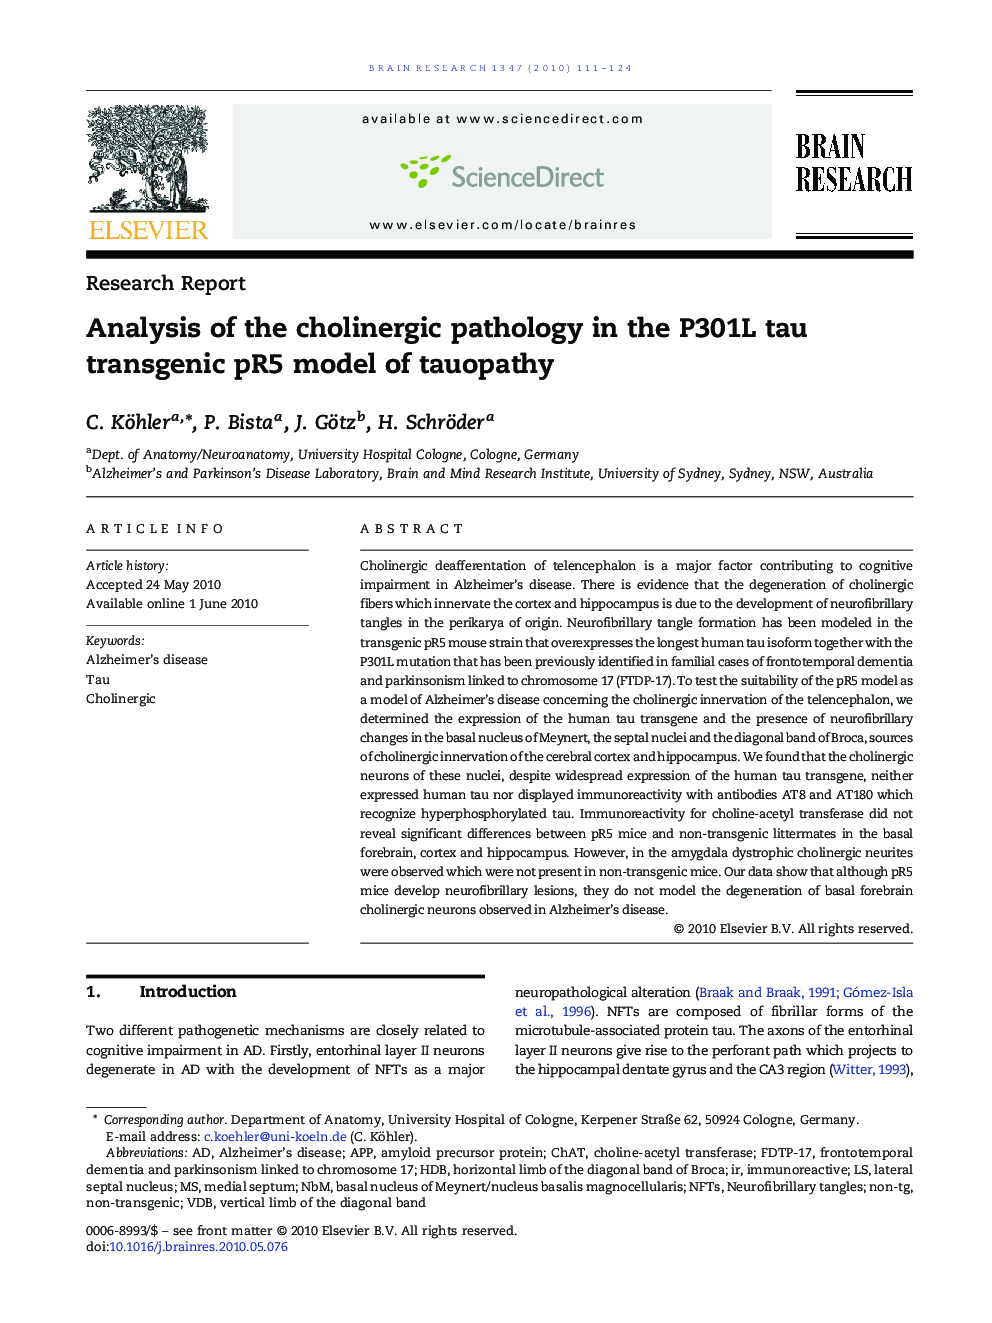 Analysis of the cholinergic pathology in the P301L tau transgenic pR5 model of tauopathy